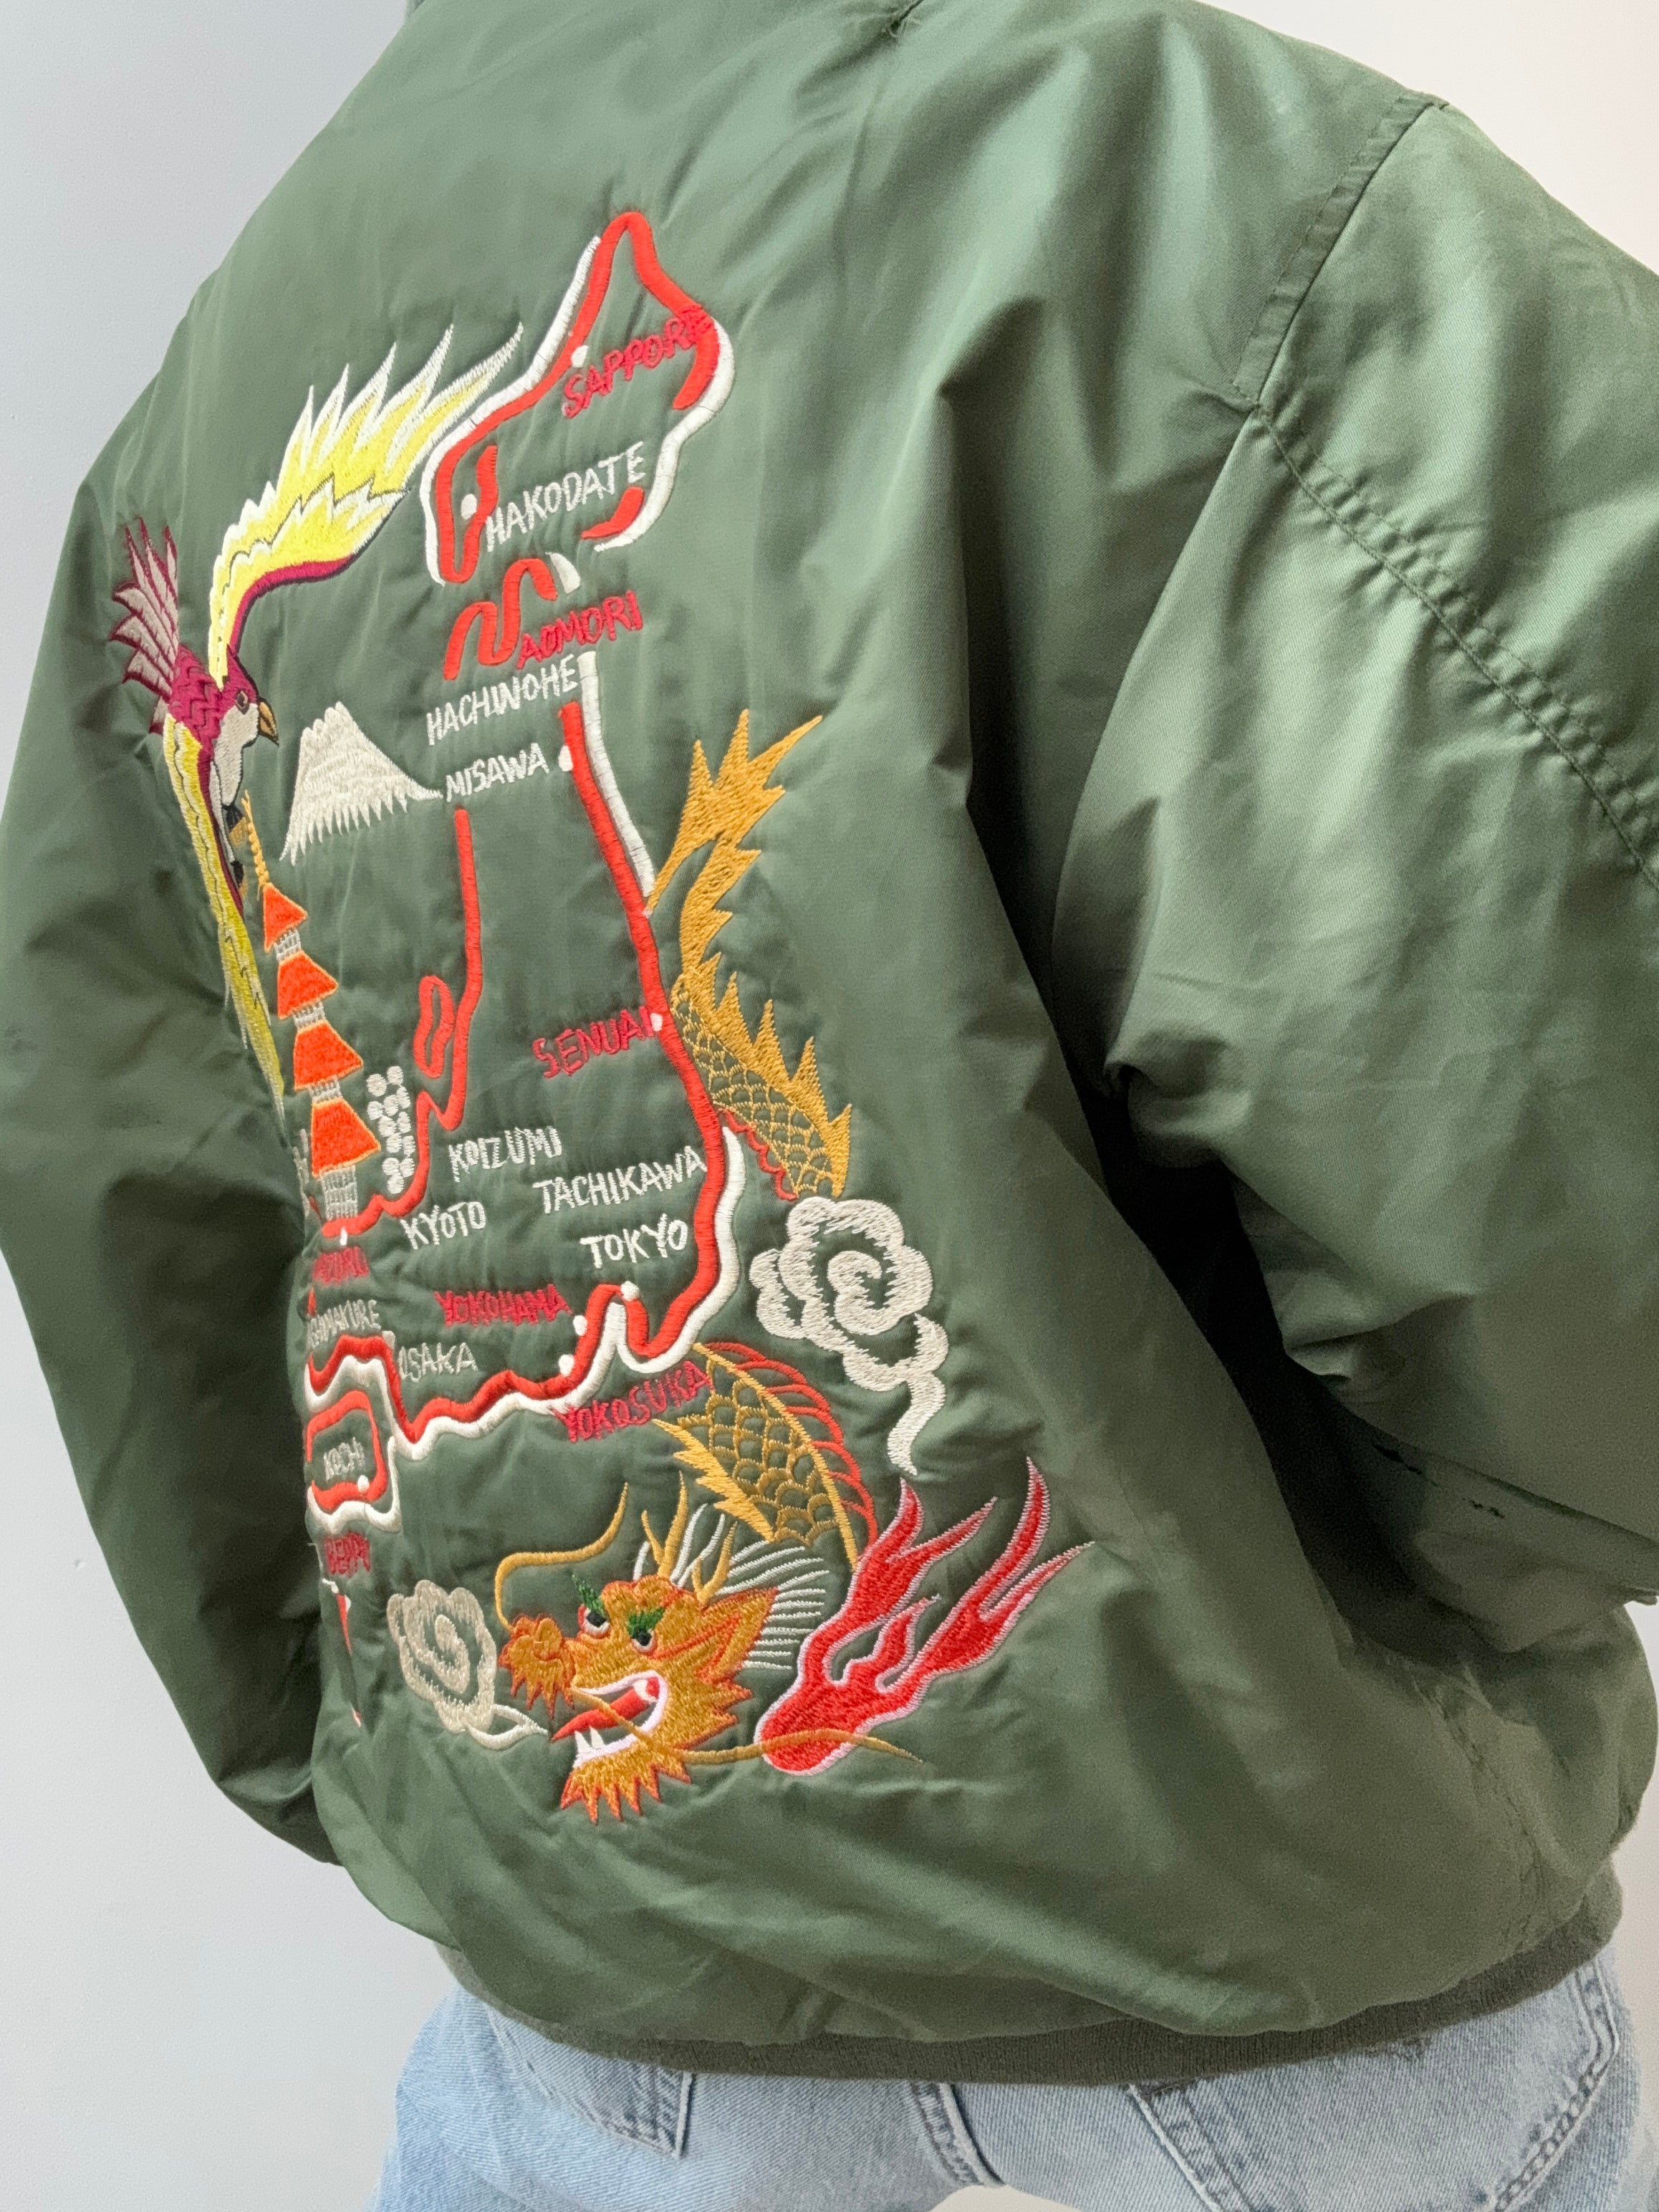 Future Nomads Jackets Large-XLarge Vintage Bomber Green Japan Dragon